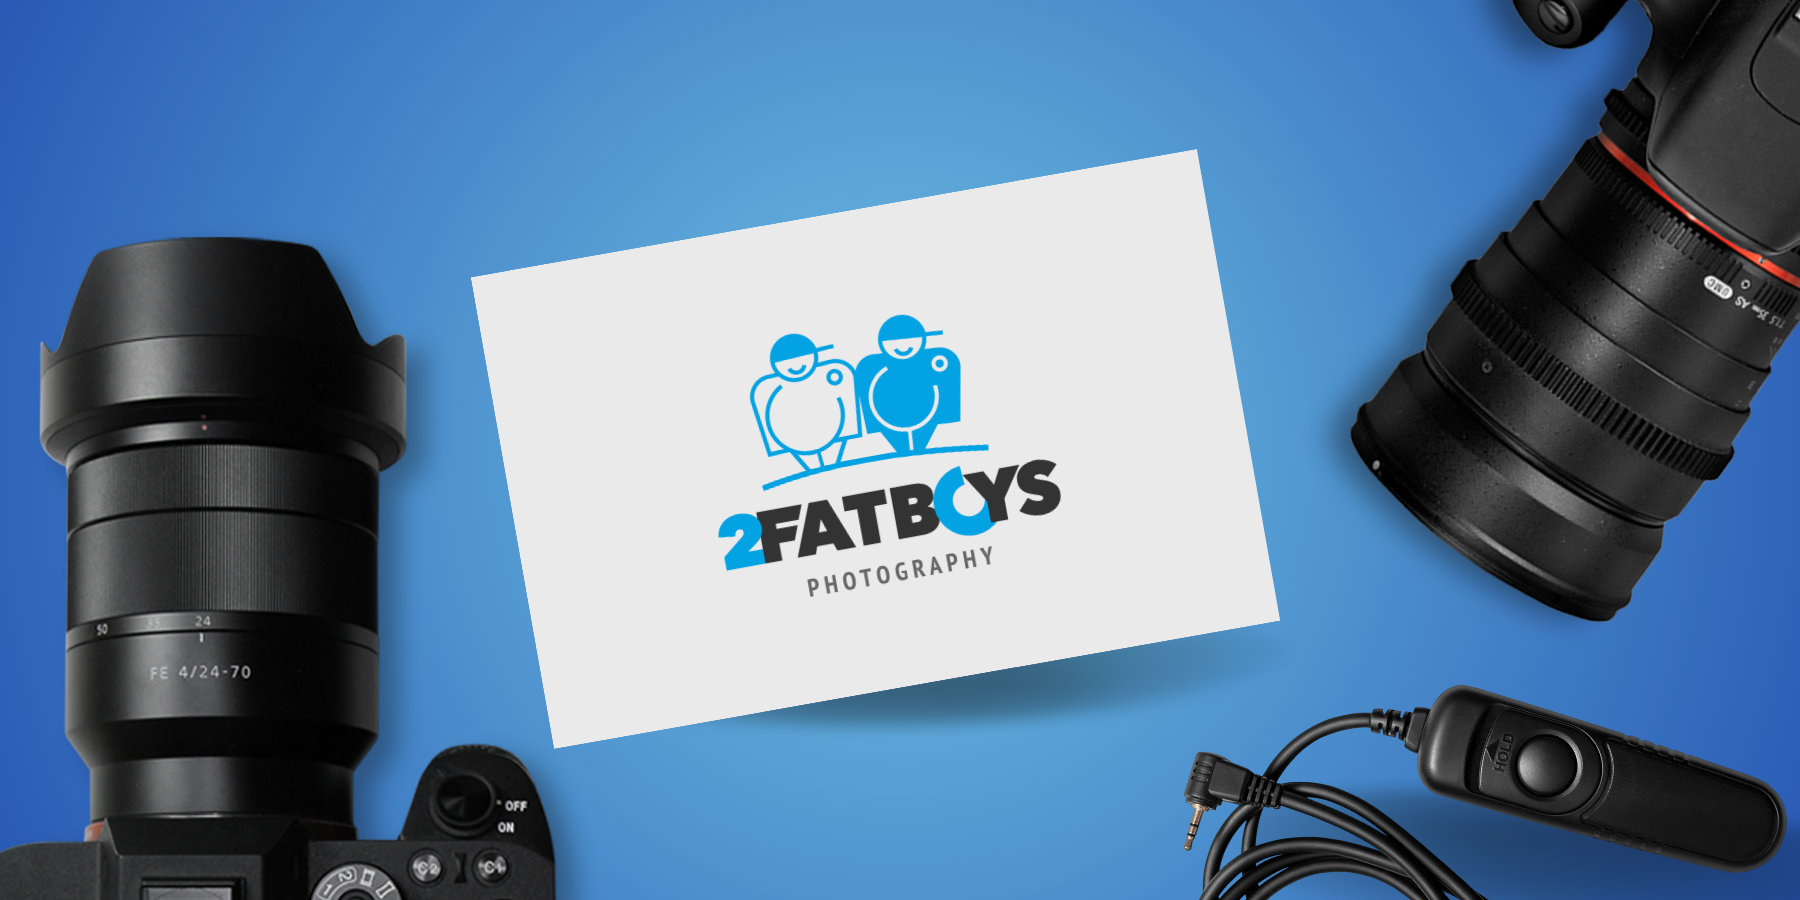 2FatBoys Photography Logo